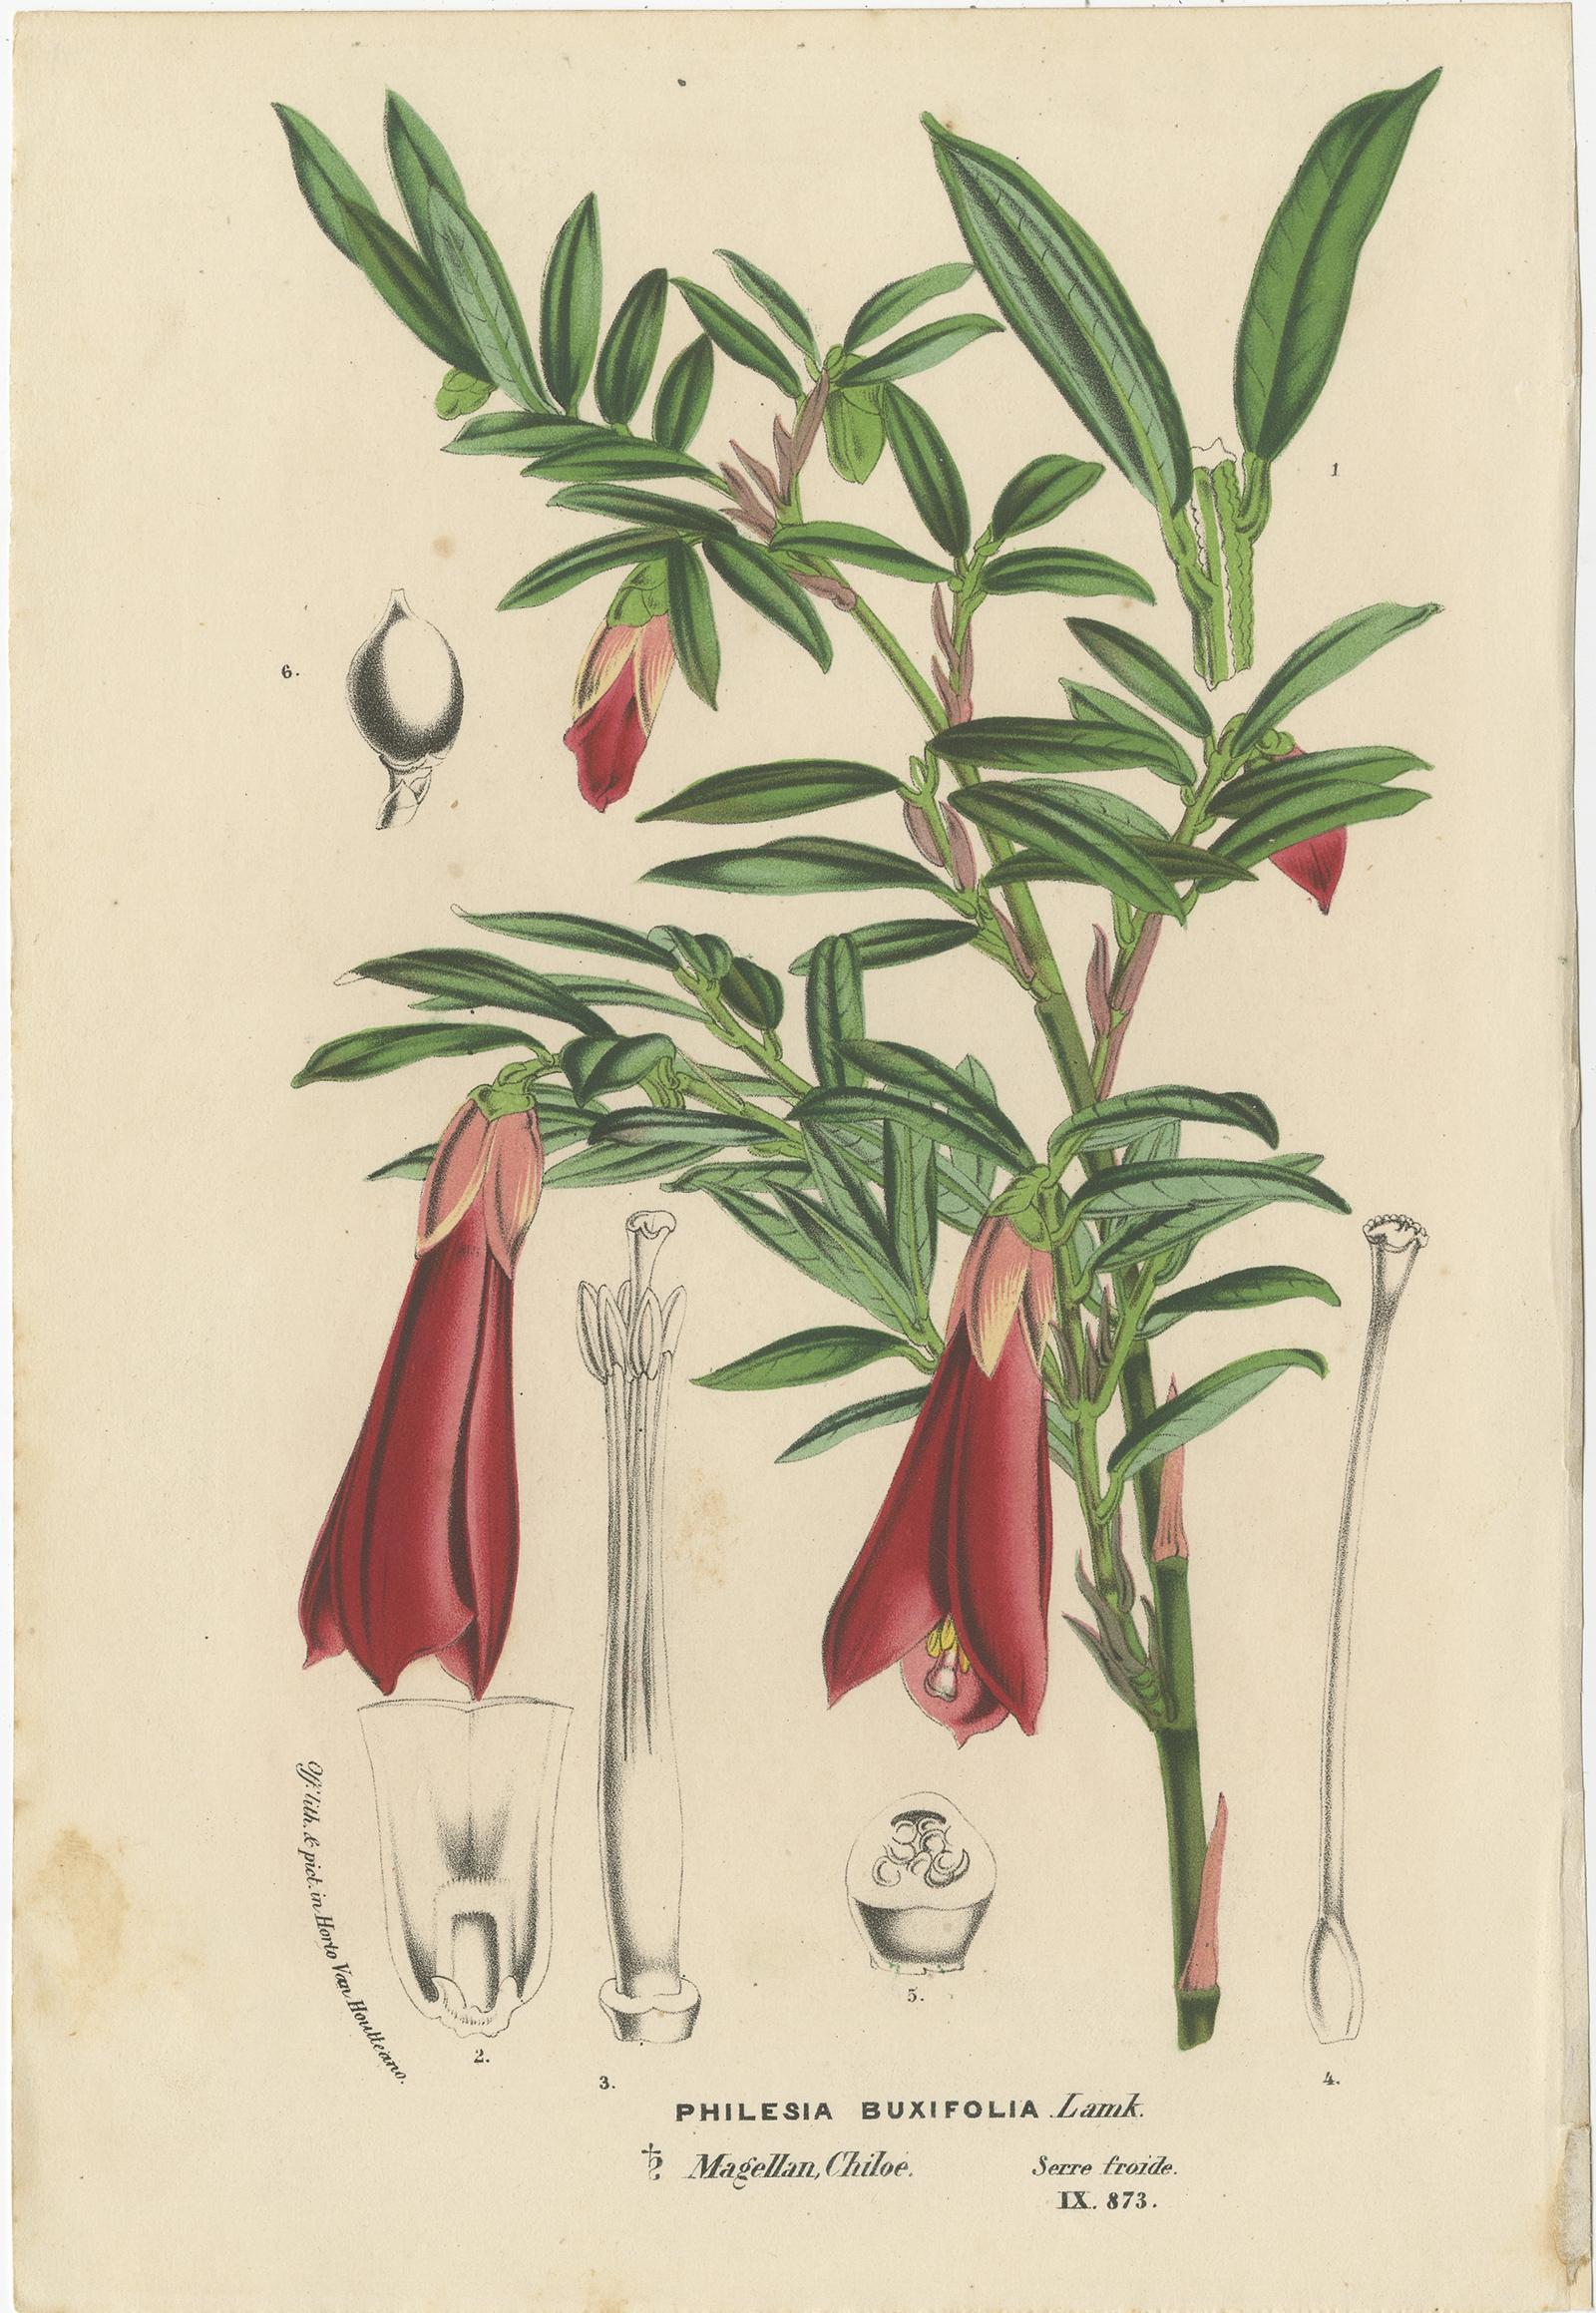 Antique print titled 'Philesia Buxifolia'. 

Lithograph of the philesia flowering plant. This print originates from 'Flore des Serres et des Jardins de l'Europe' by Louis van Houtte. 

Artists and Engravers: Louis van Houtte was the proprietor